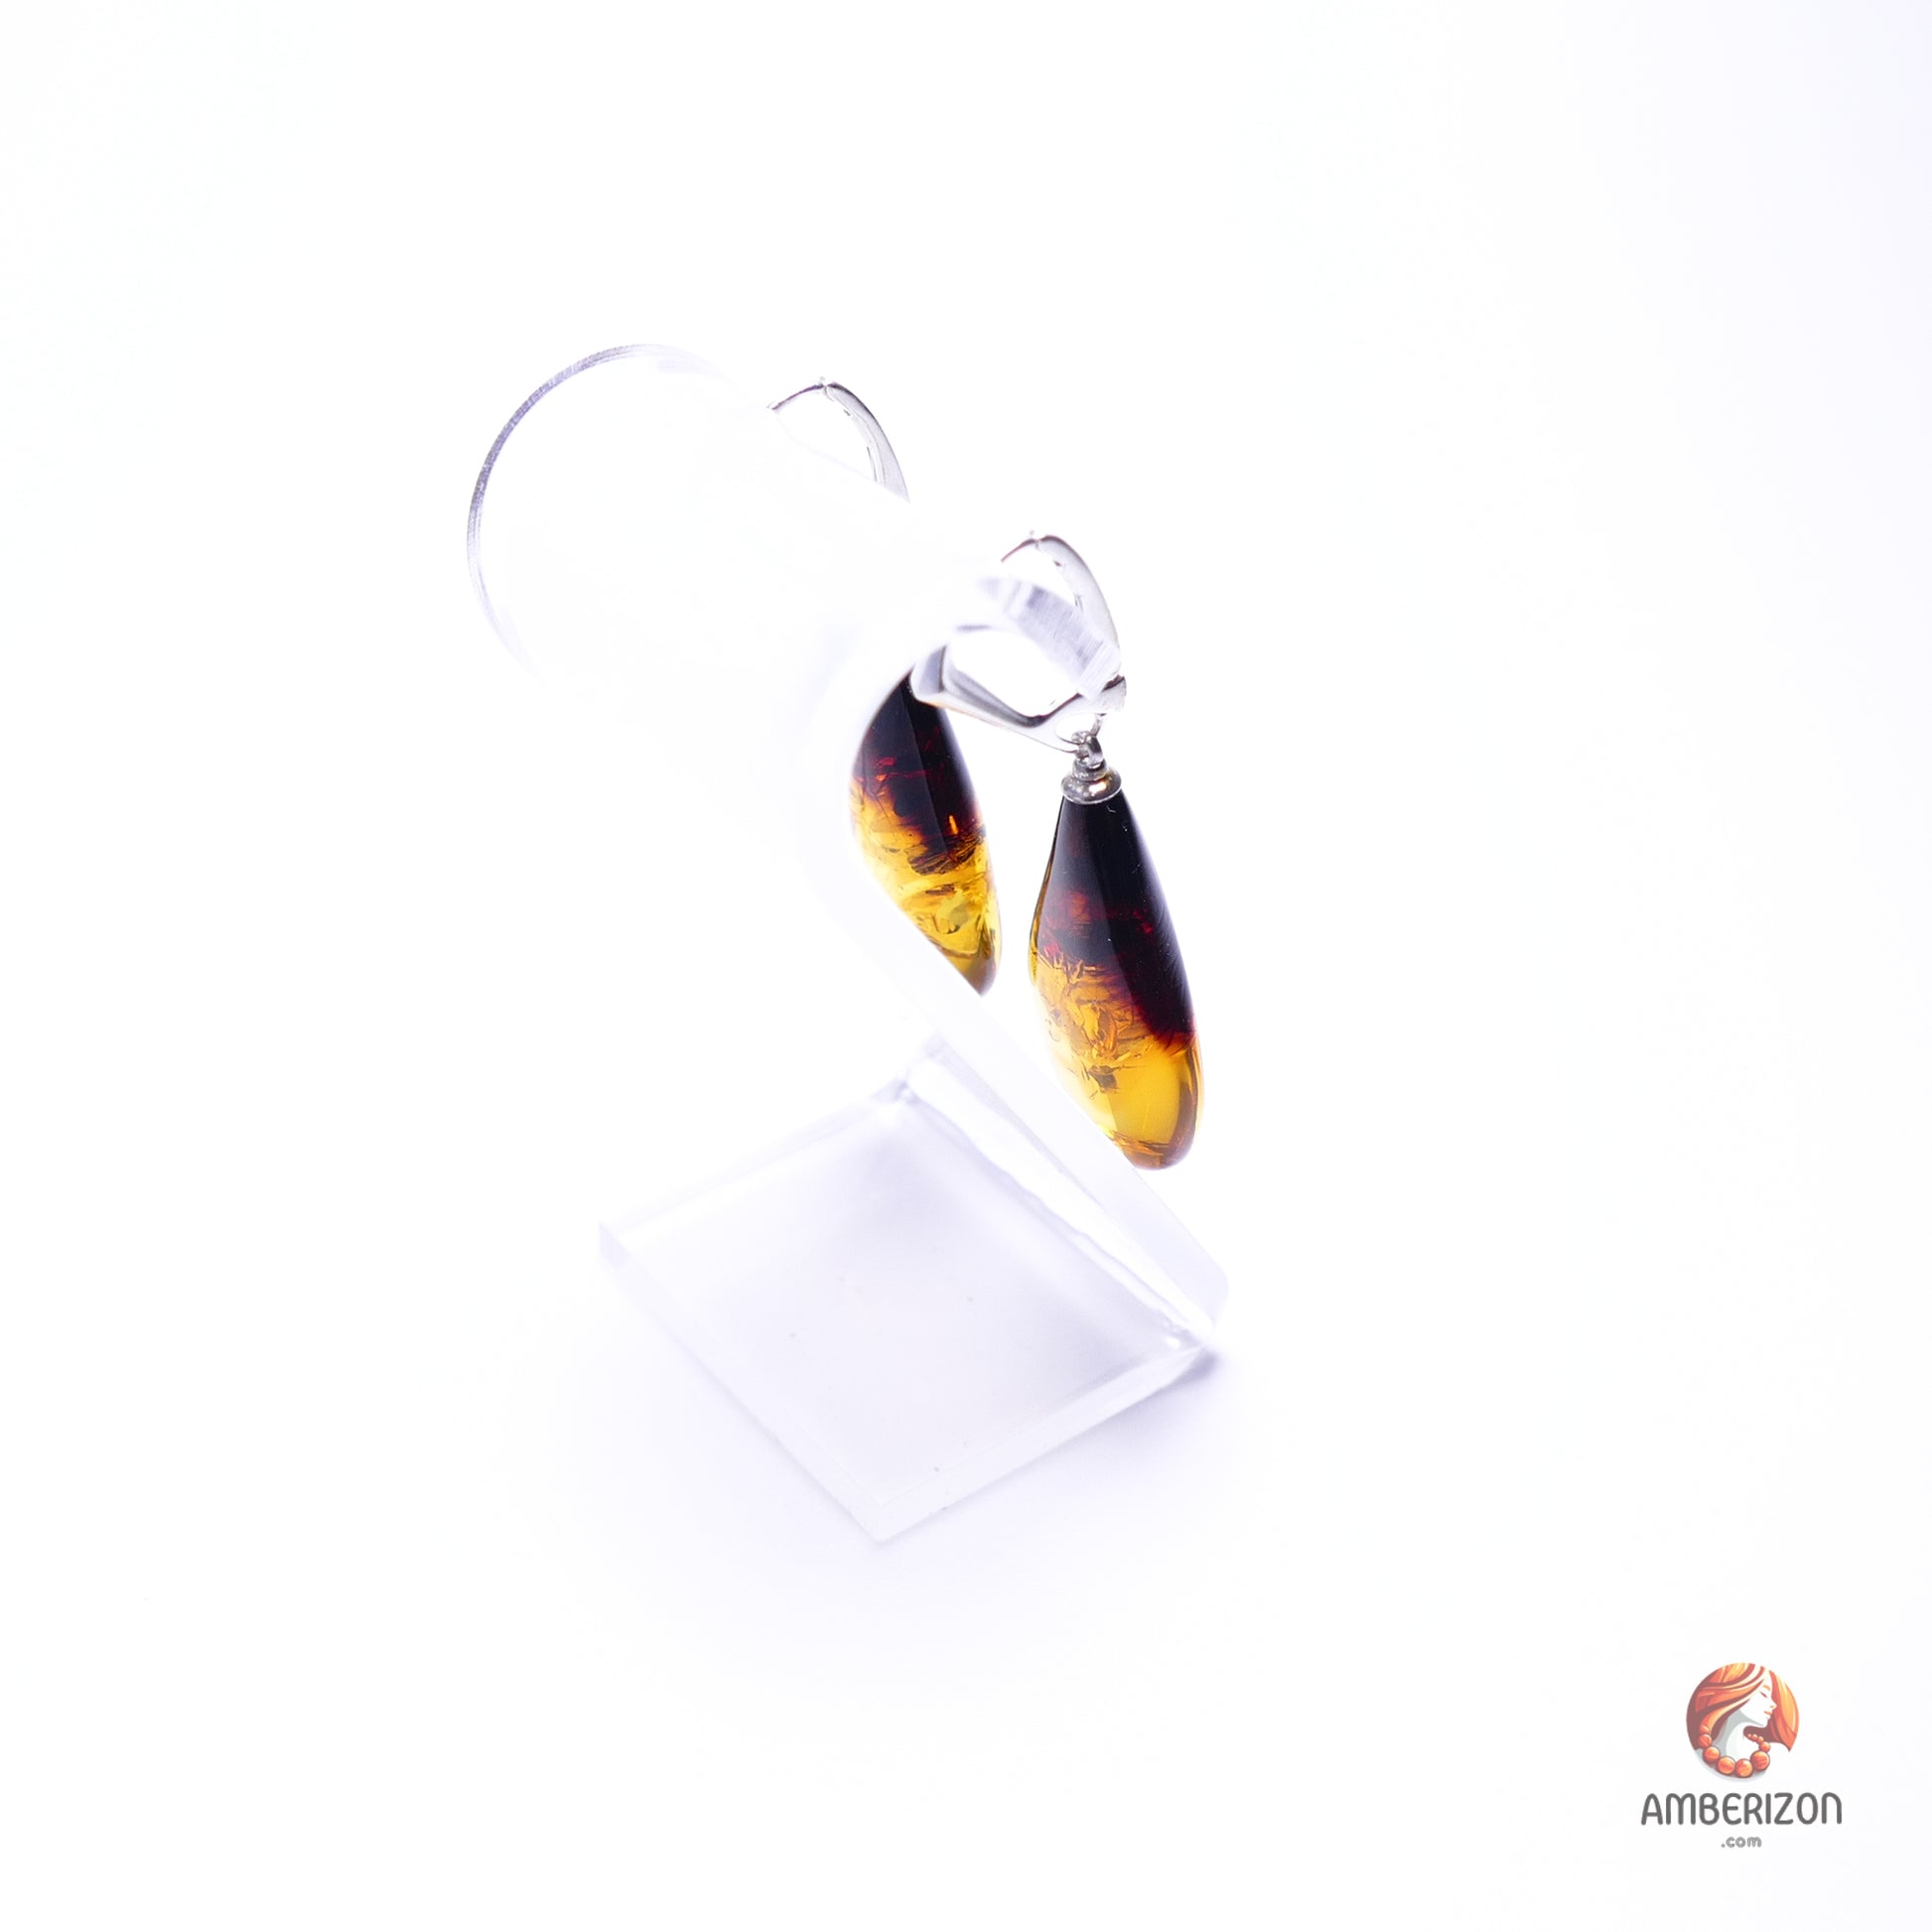 Baltic amber earrings - Droplets - leverbacks